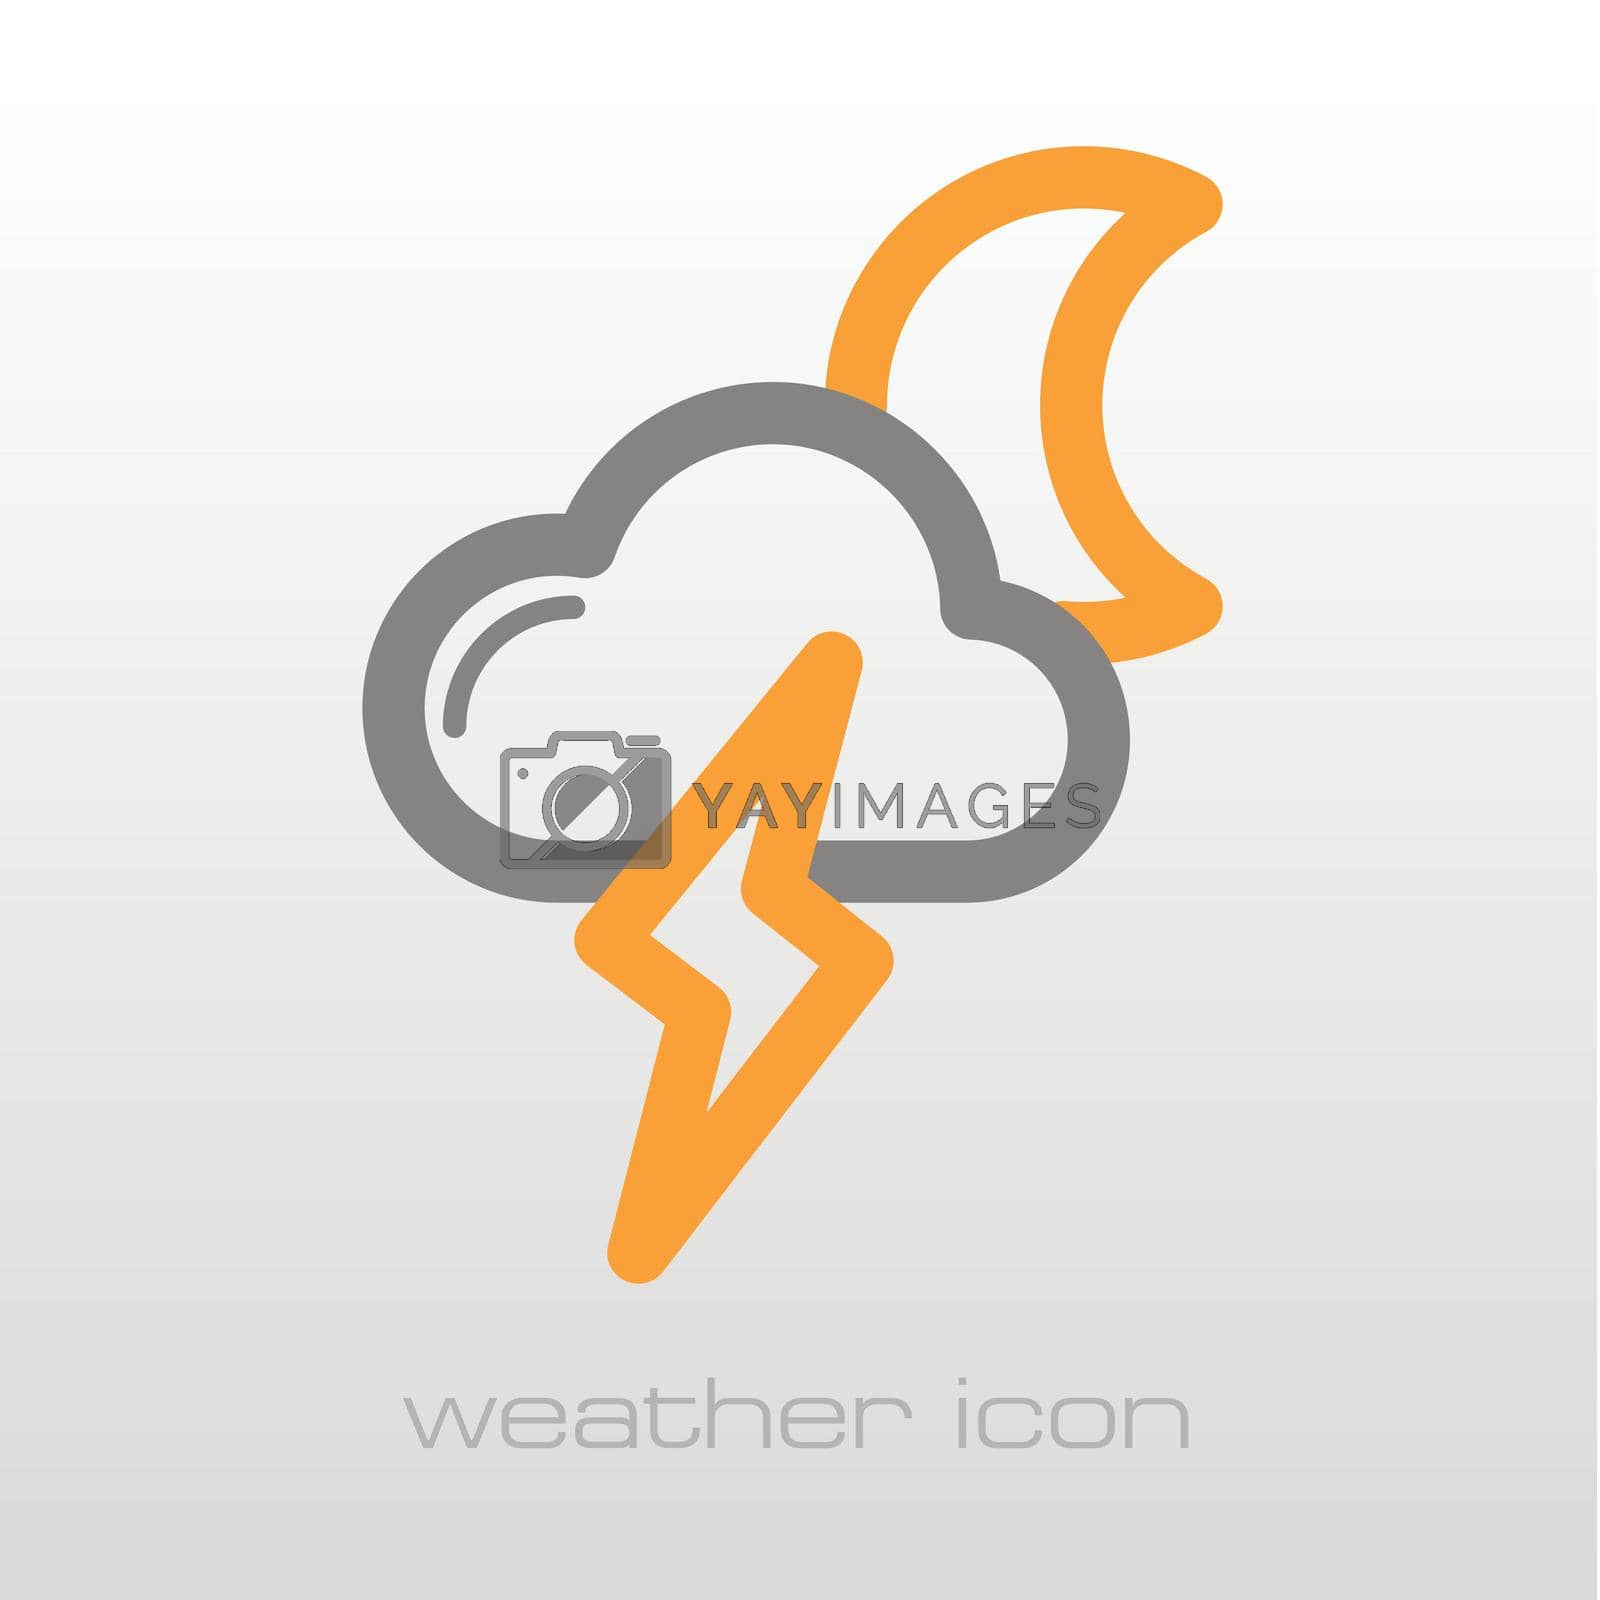 Moon Cloud Lightning outline icon. Sleep night dreams symbol. Meteorology. Weather. Vector illustration eps 10